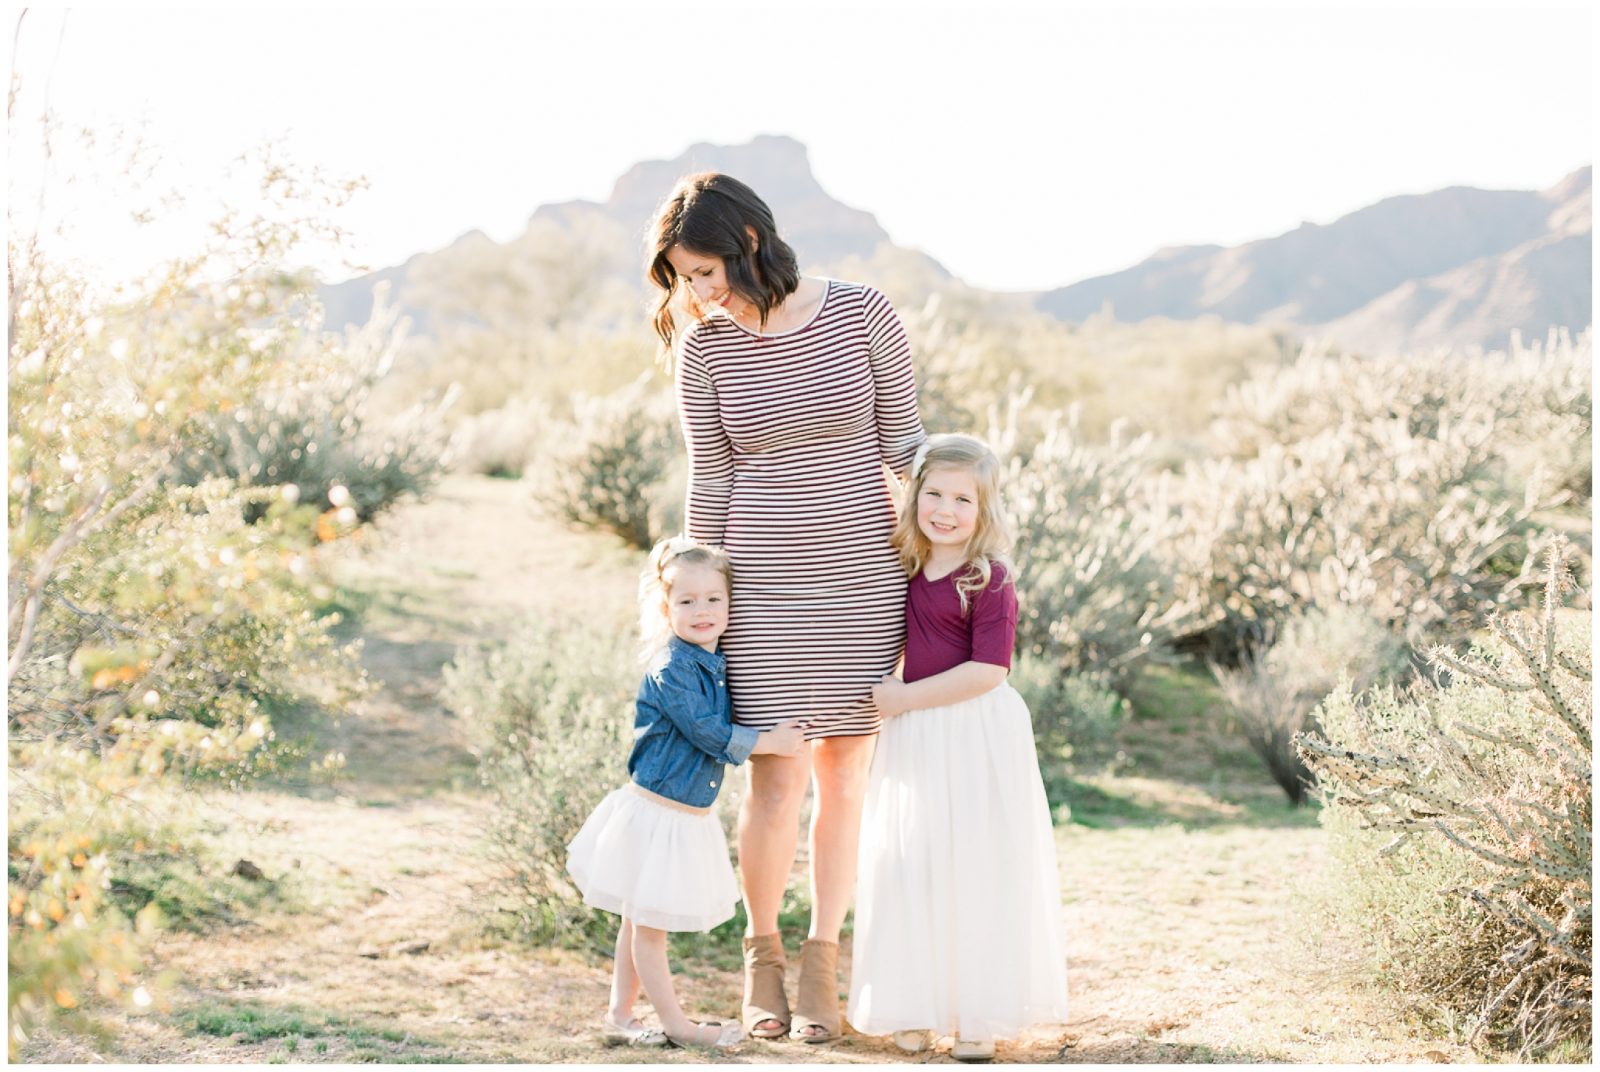 Family Photo Session in the Lush Green Mesa, Arizona Desert by Aly Kirk Photo